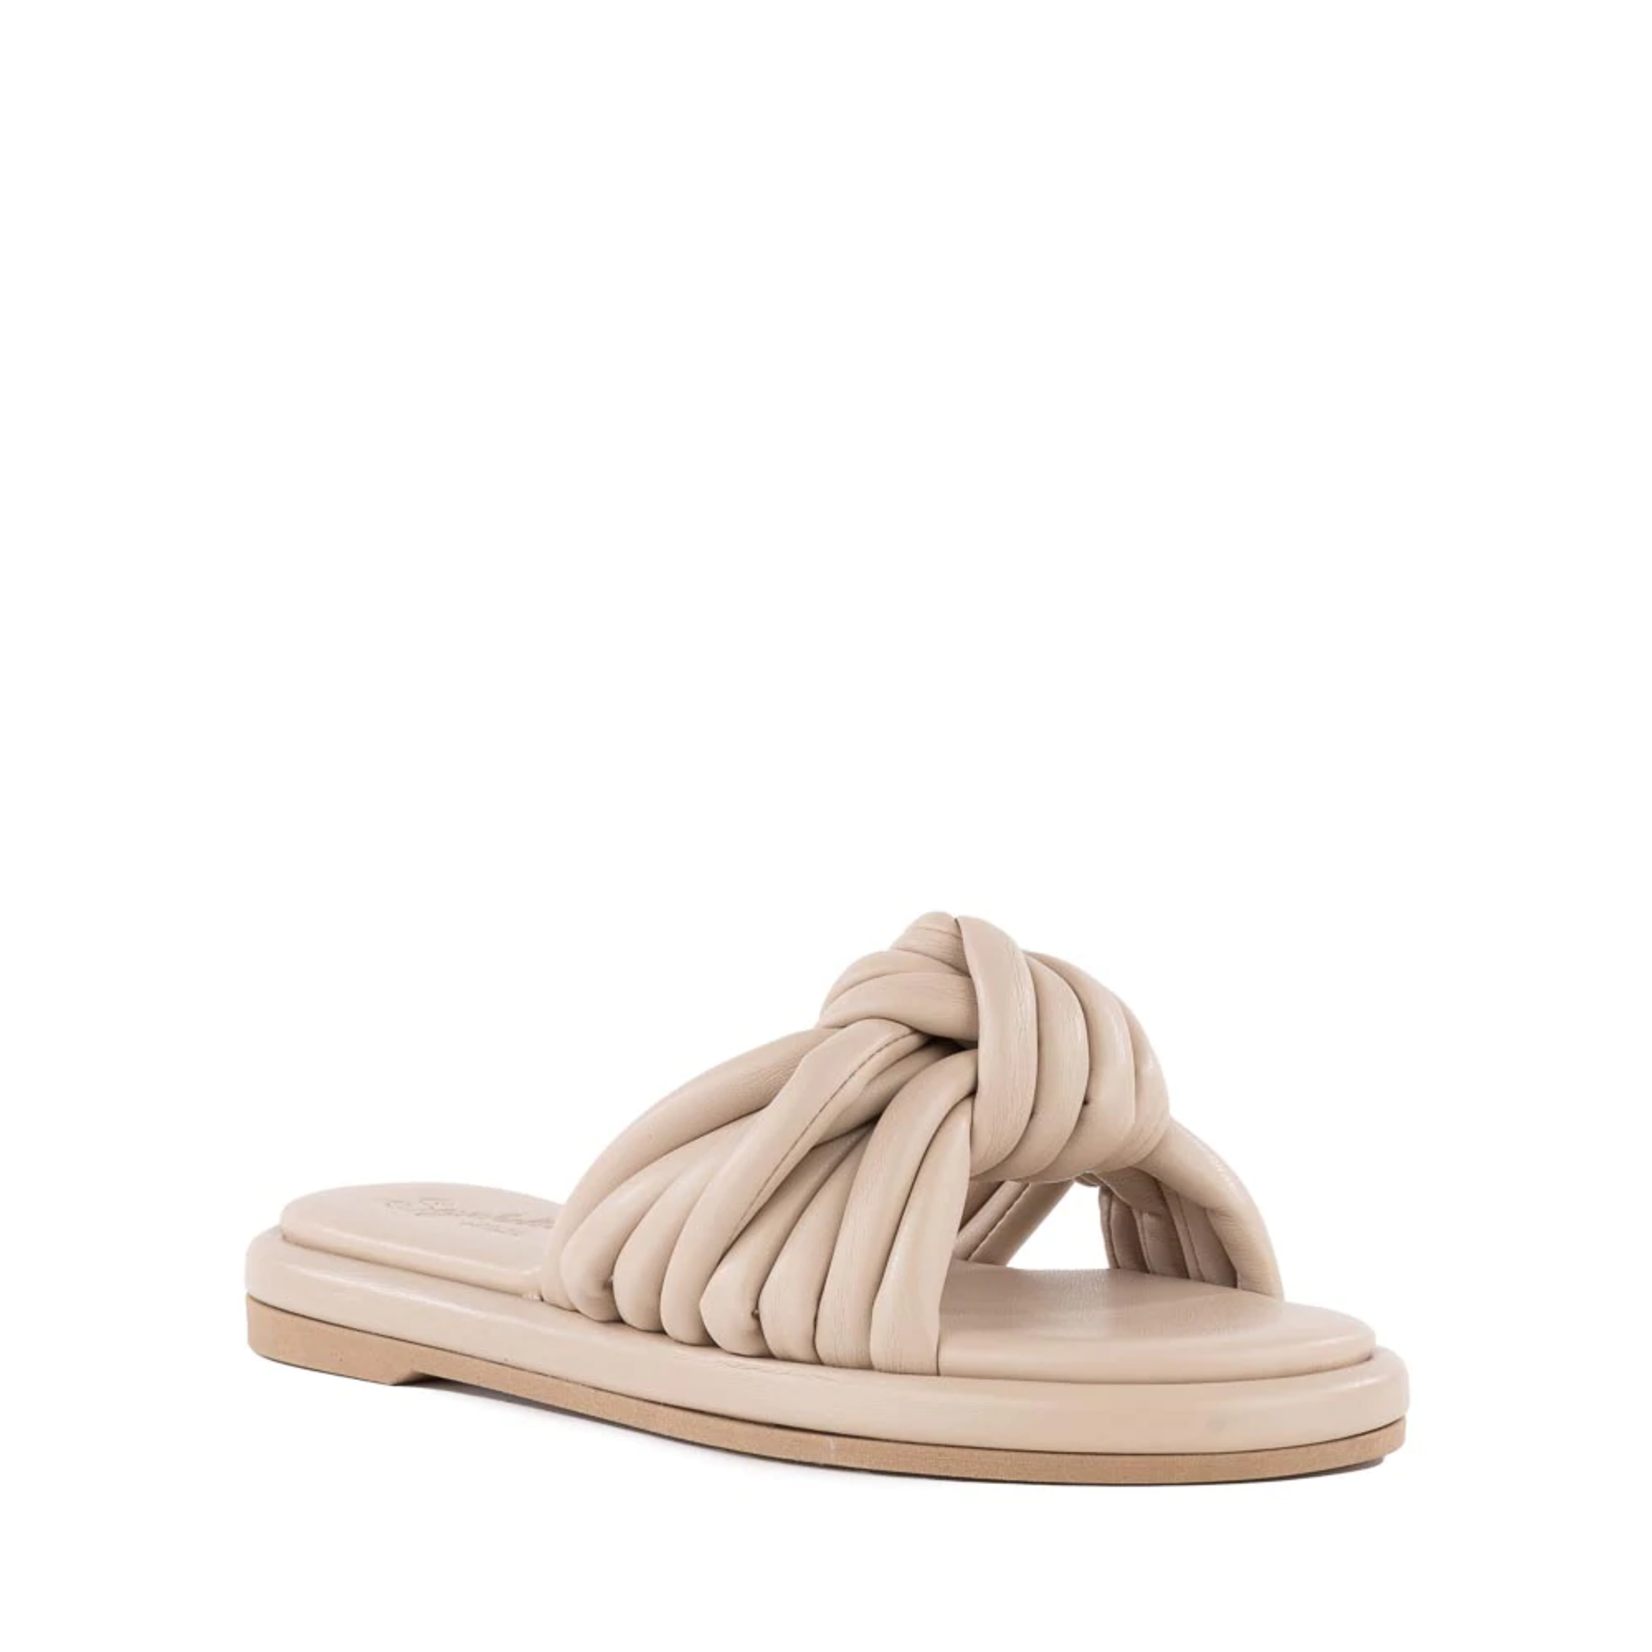 Seychelles Simply The Best Sandal